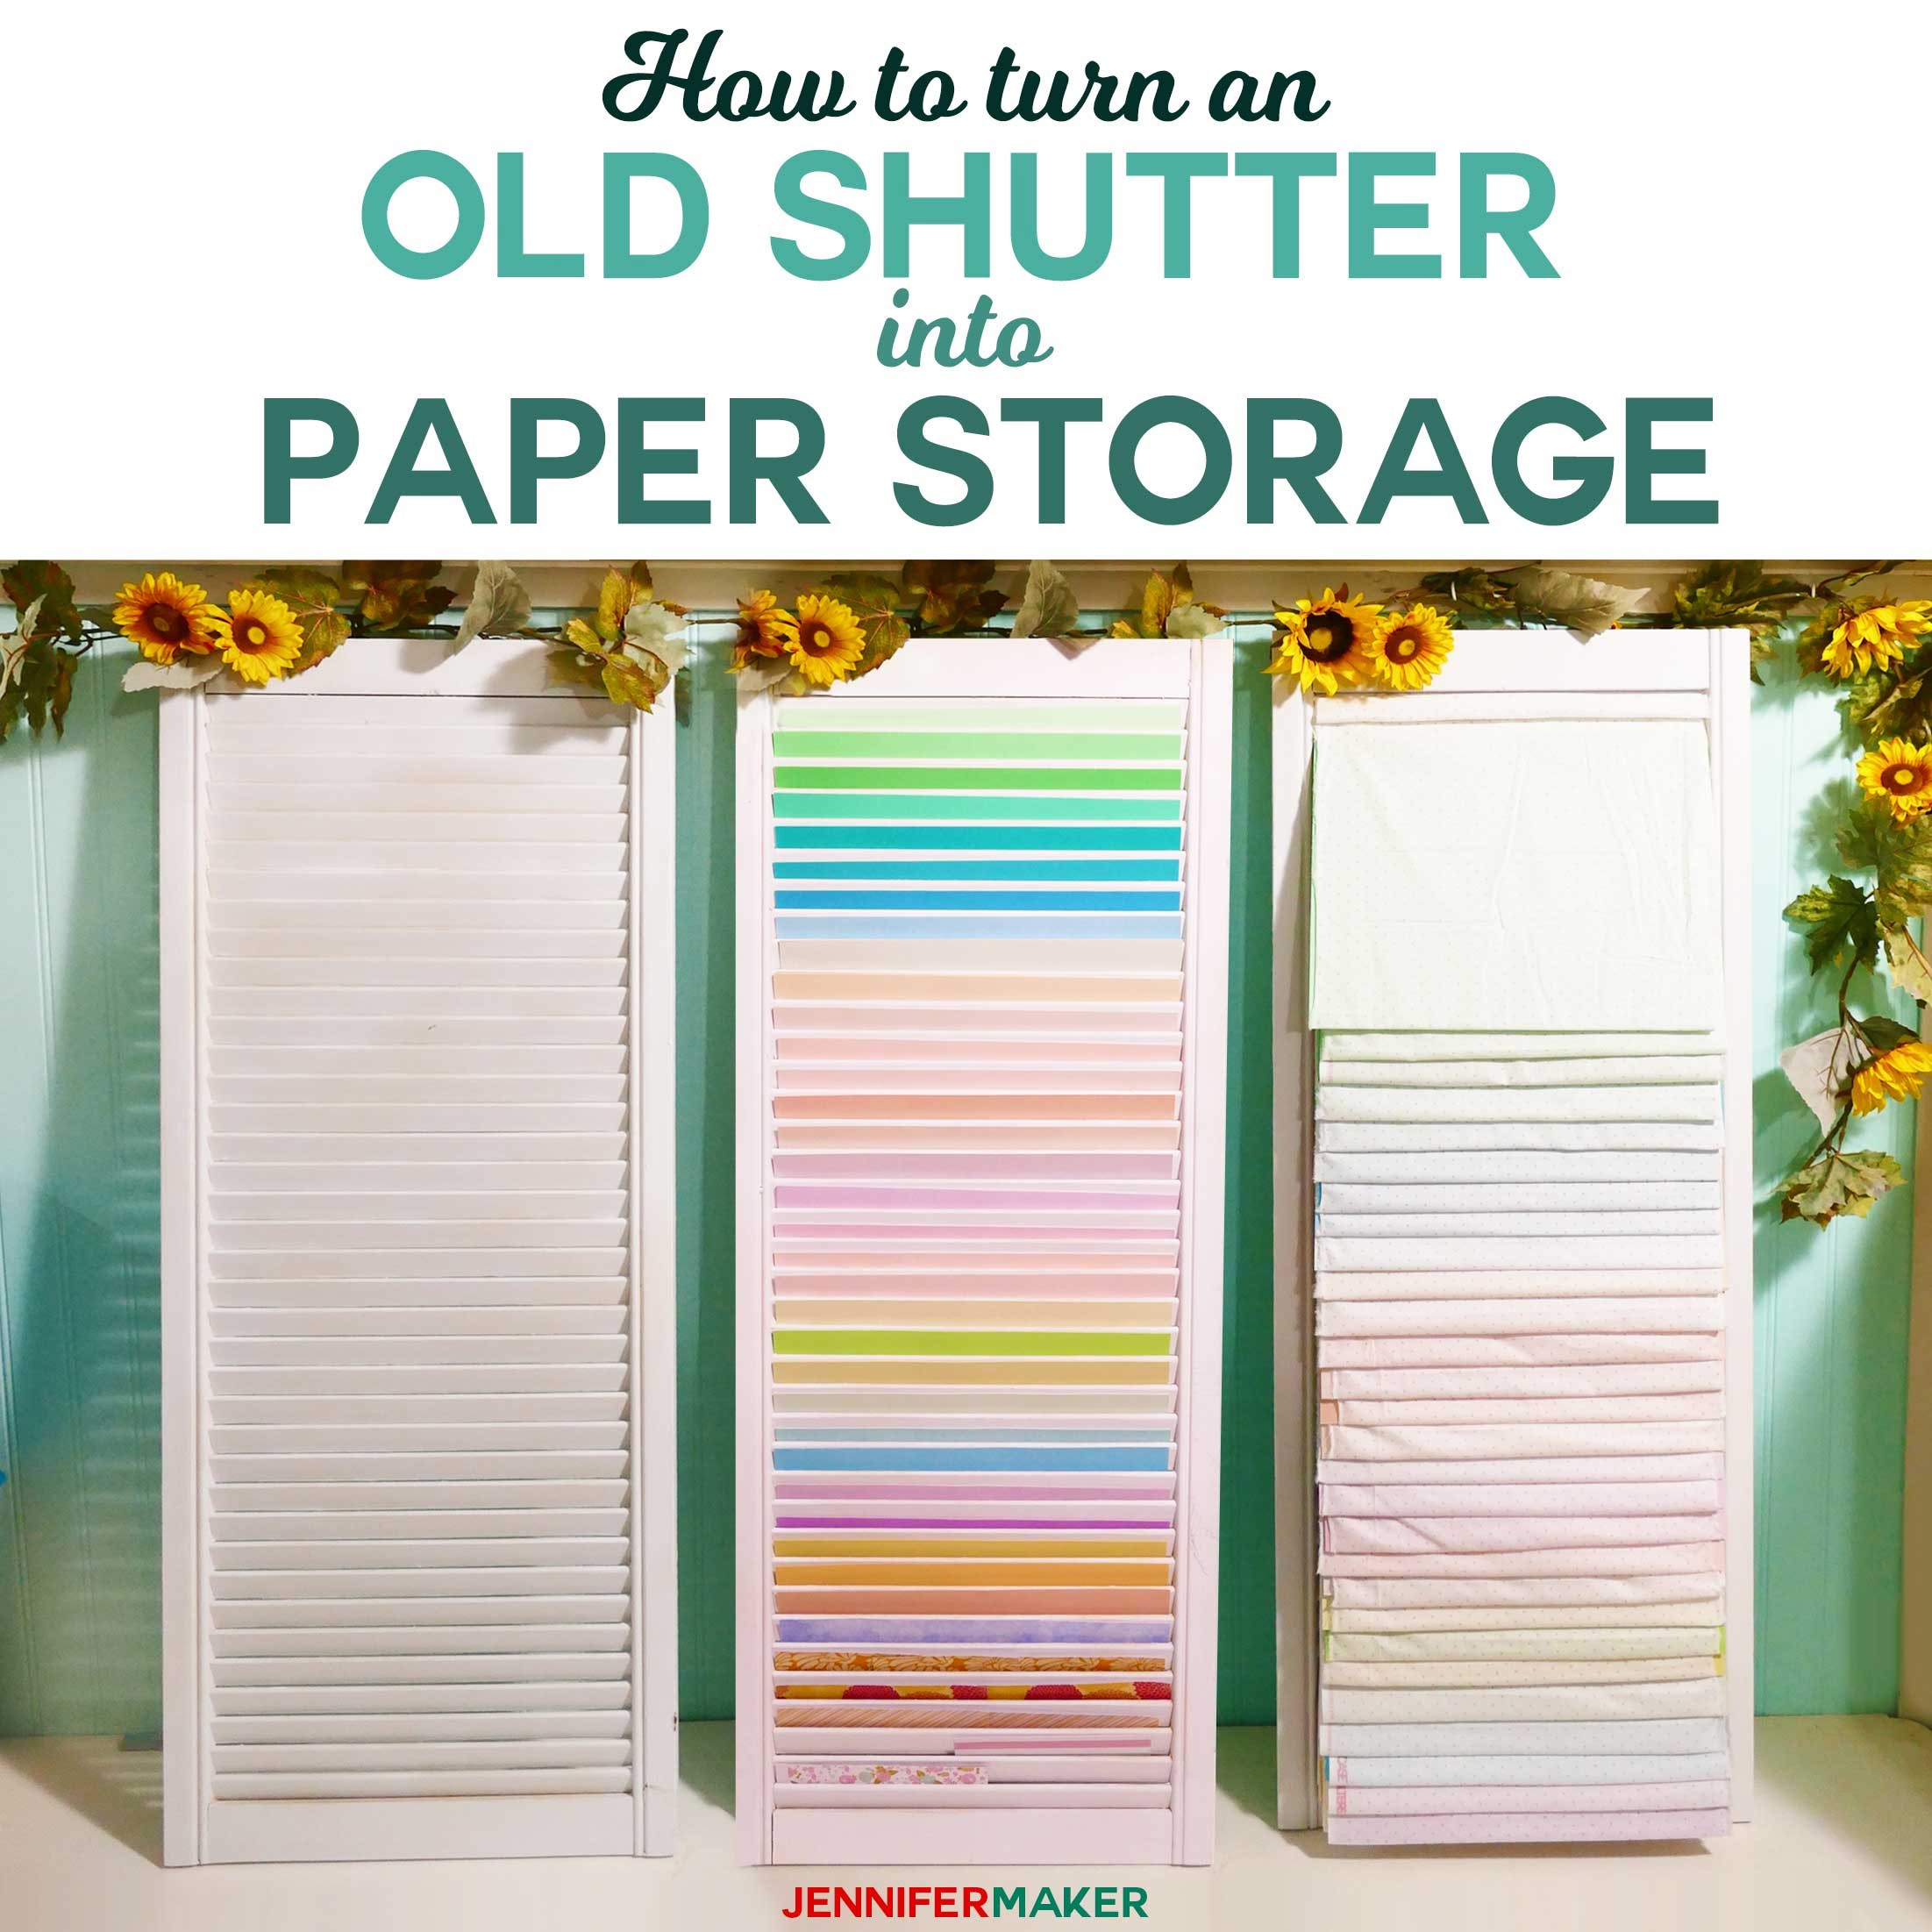 8. Paper Storage via Simphome